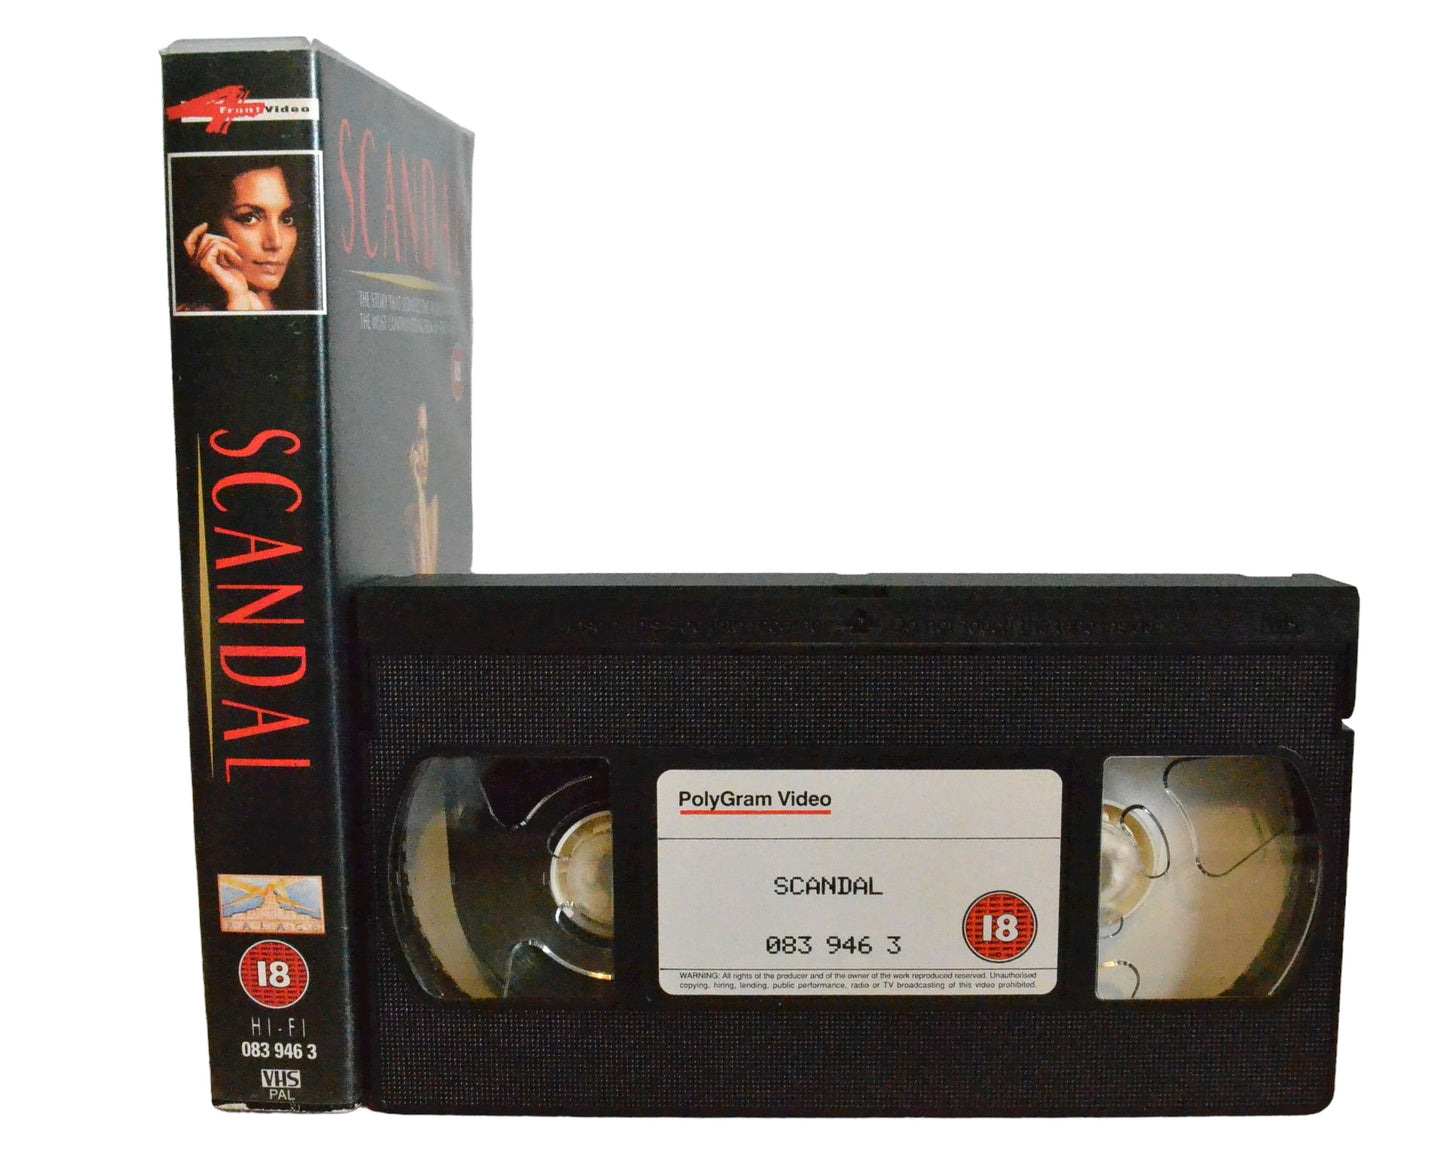 Scandal - John Hurt - polyGram Video - Action - Pal - VHS-